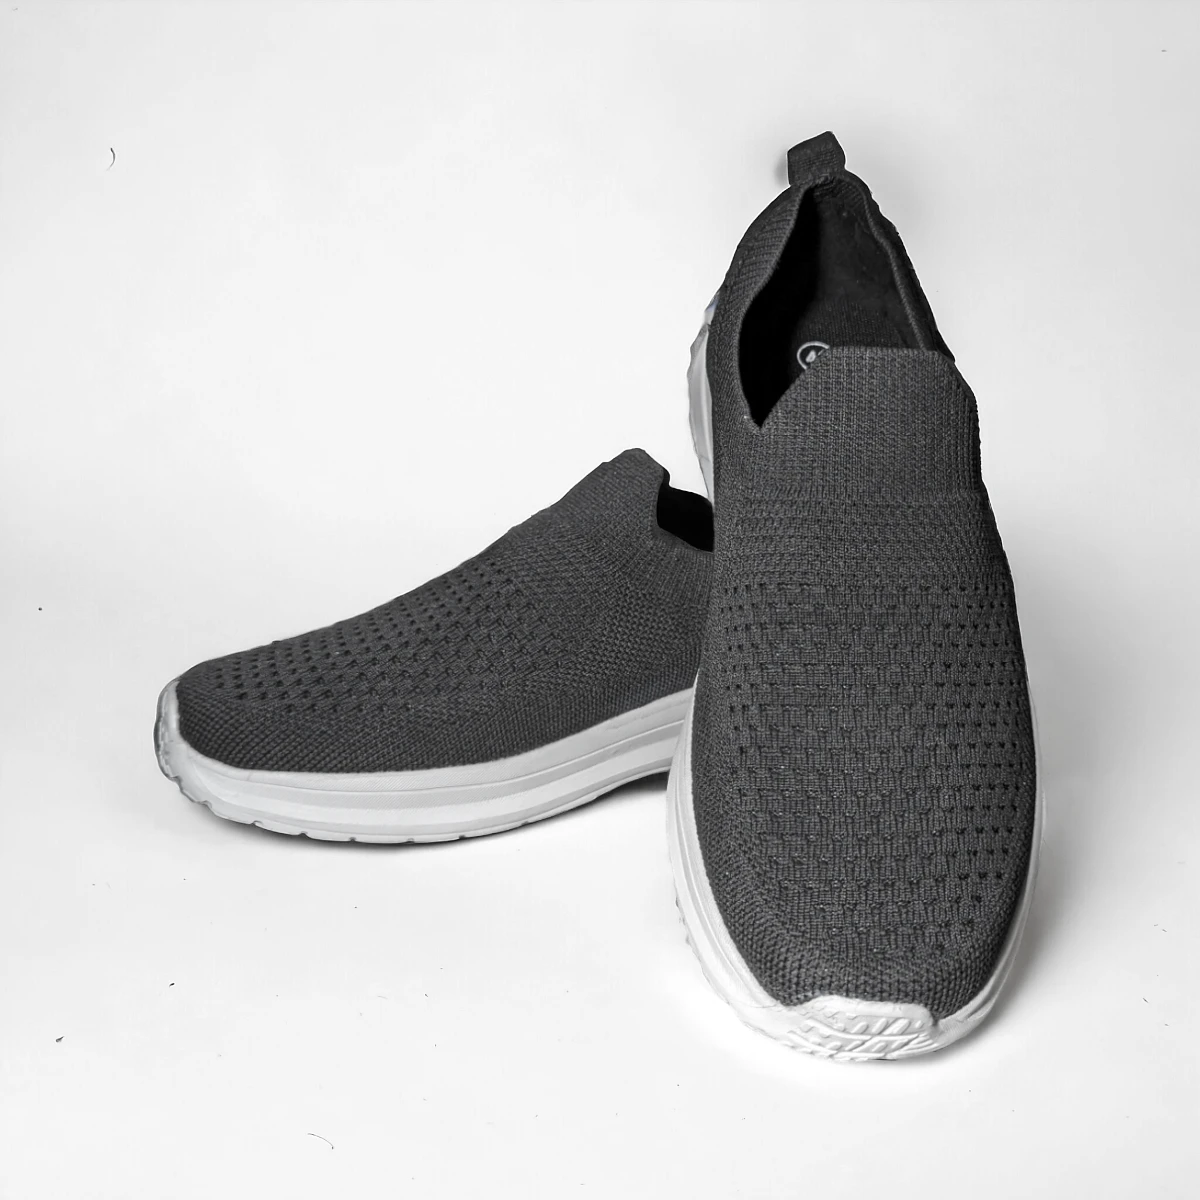 Western Mesh Casual Sneakers For Men - Black -W2350